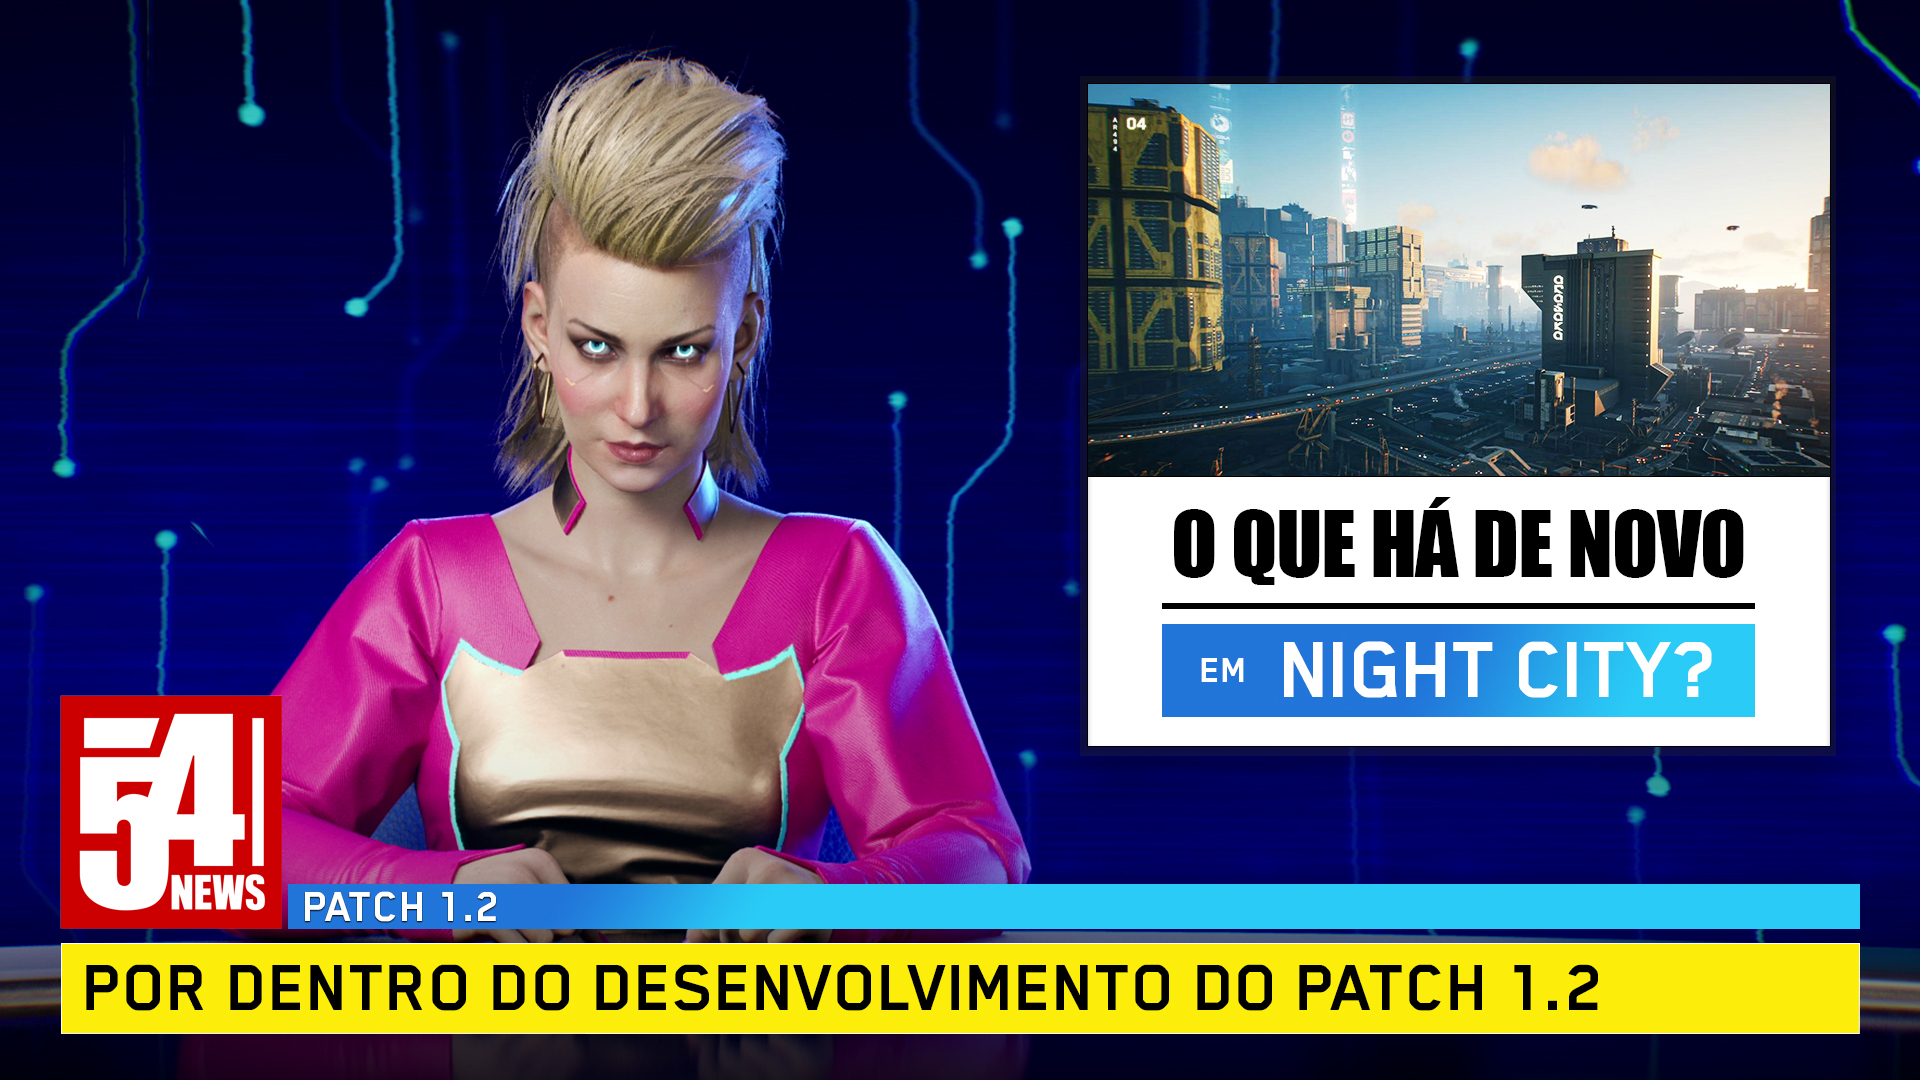 Anúncio do patch 1.2 de Cyberpunk 2077 no formato de comercial televisivo